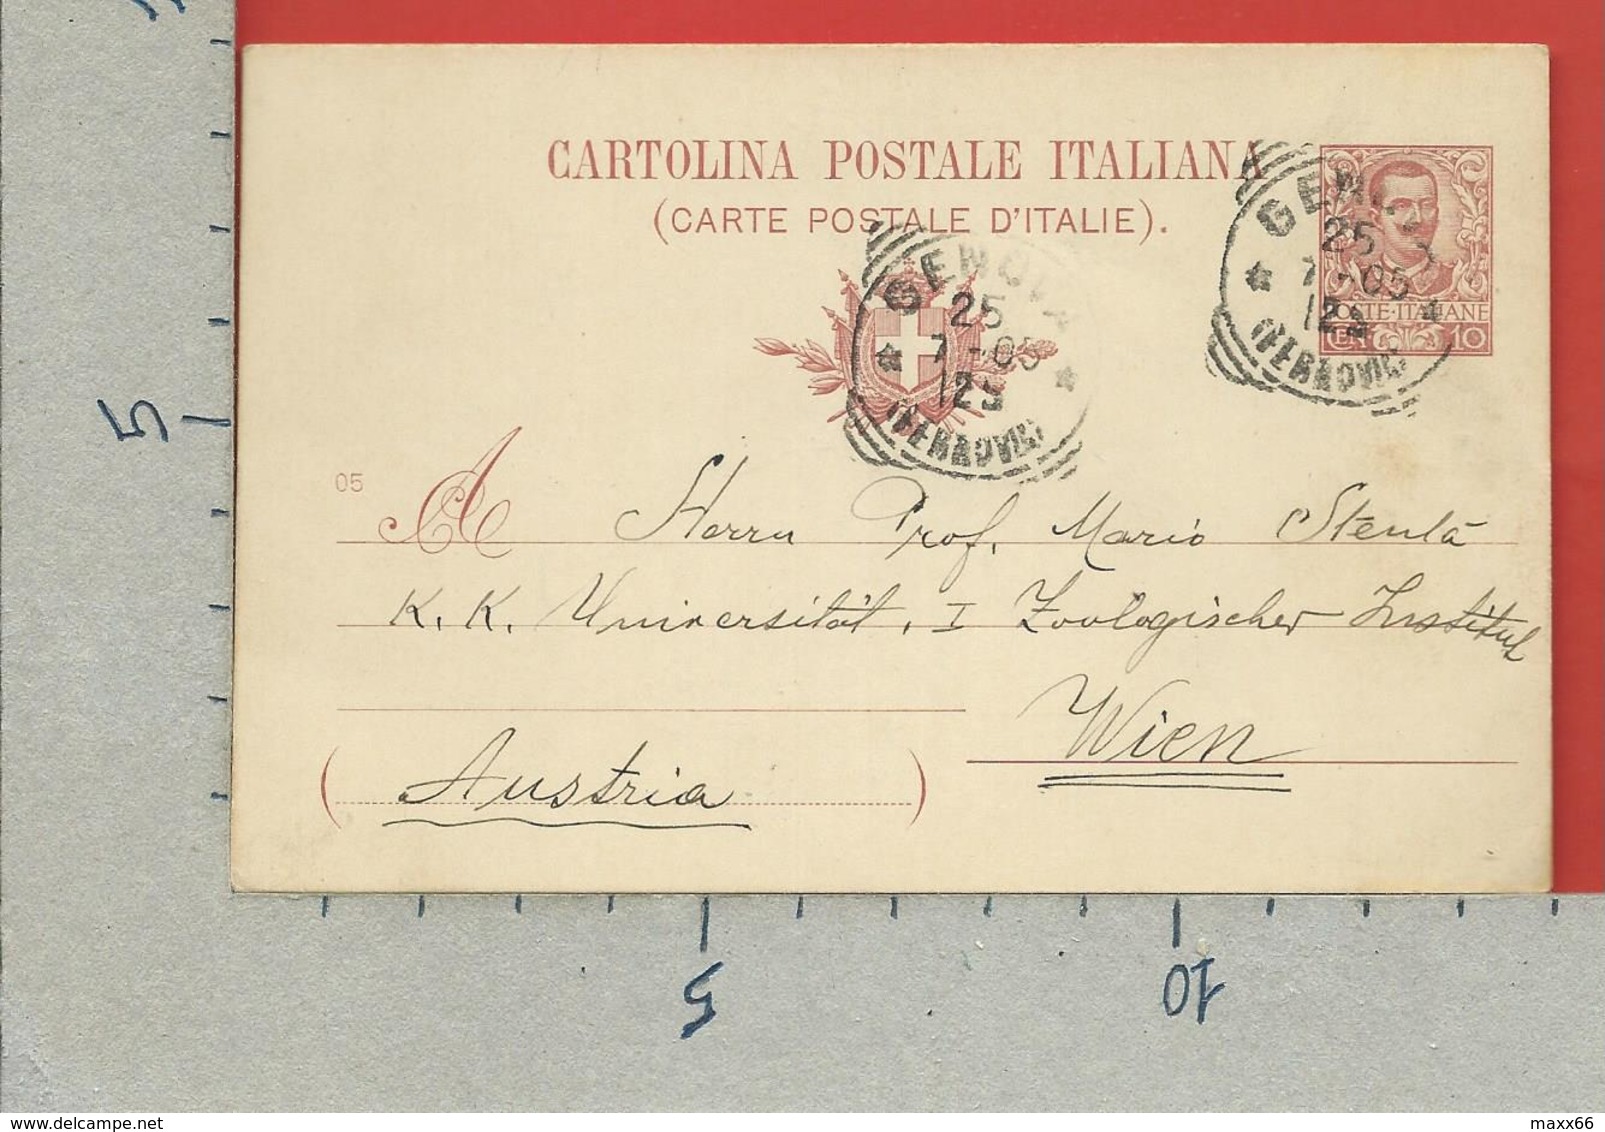 CARTOLINA POSTALE VG ITALIA - Tipo Floreale V. Emanuele III - MARIO STENTA 1905 - S. CP30 MILL. 05 - AUSTRIA - Entiers Postaux